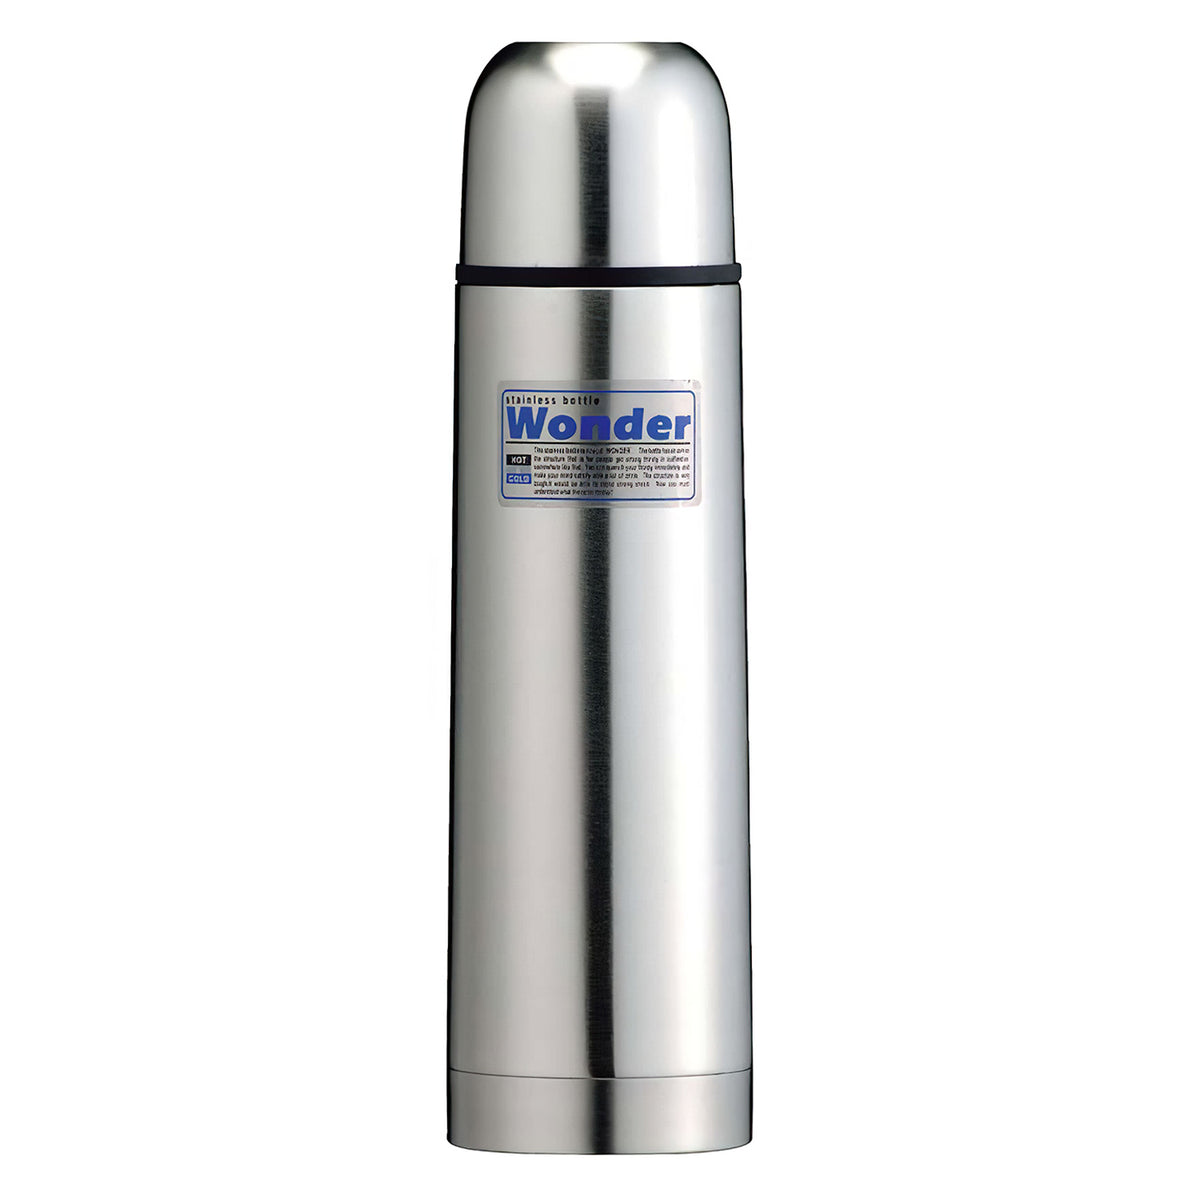 Tafuko Wonder Stainless Steel Water Bottle